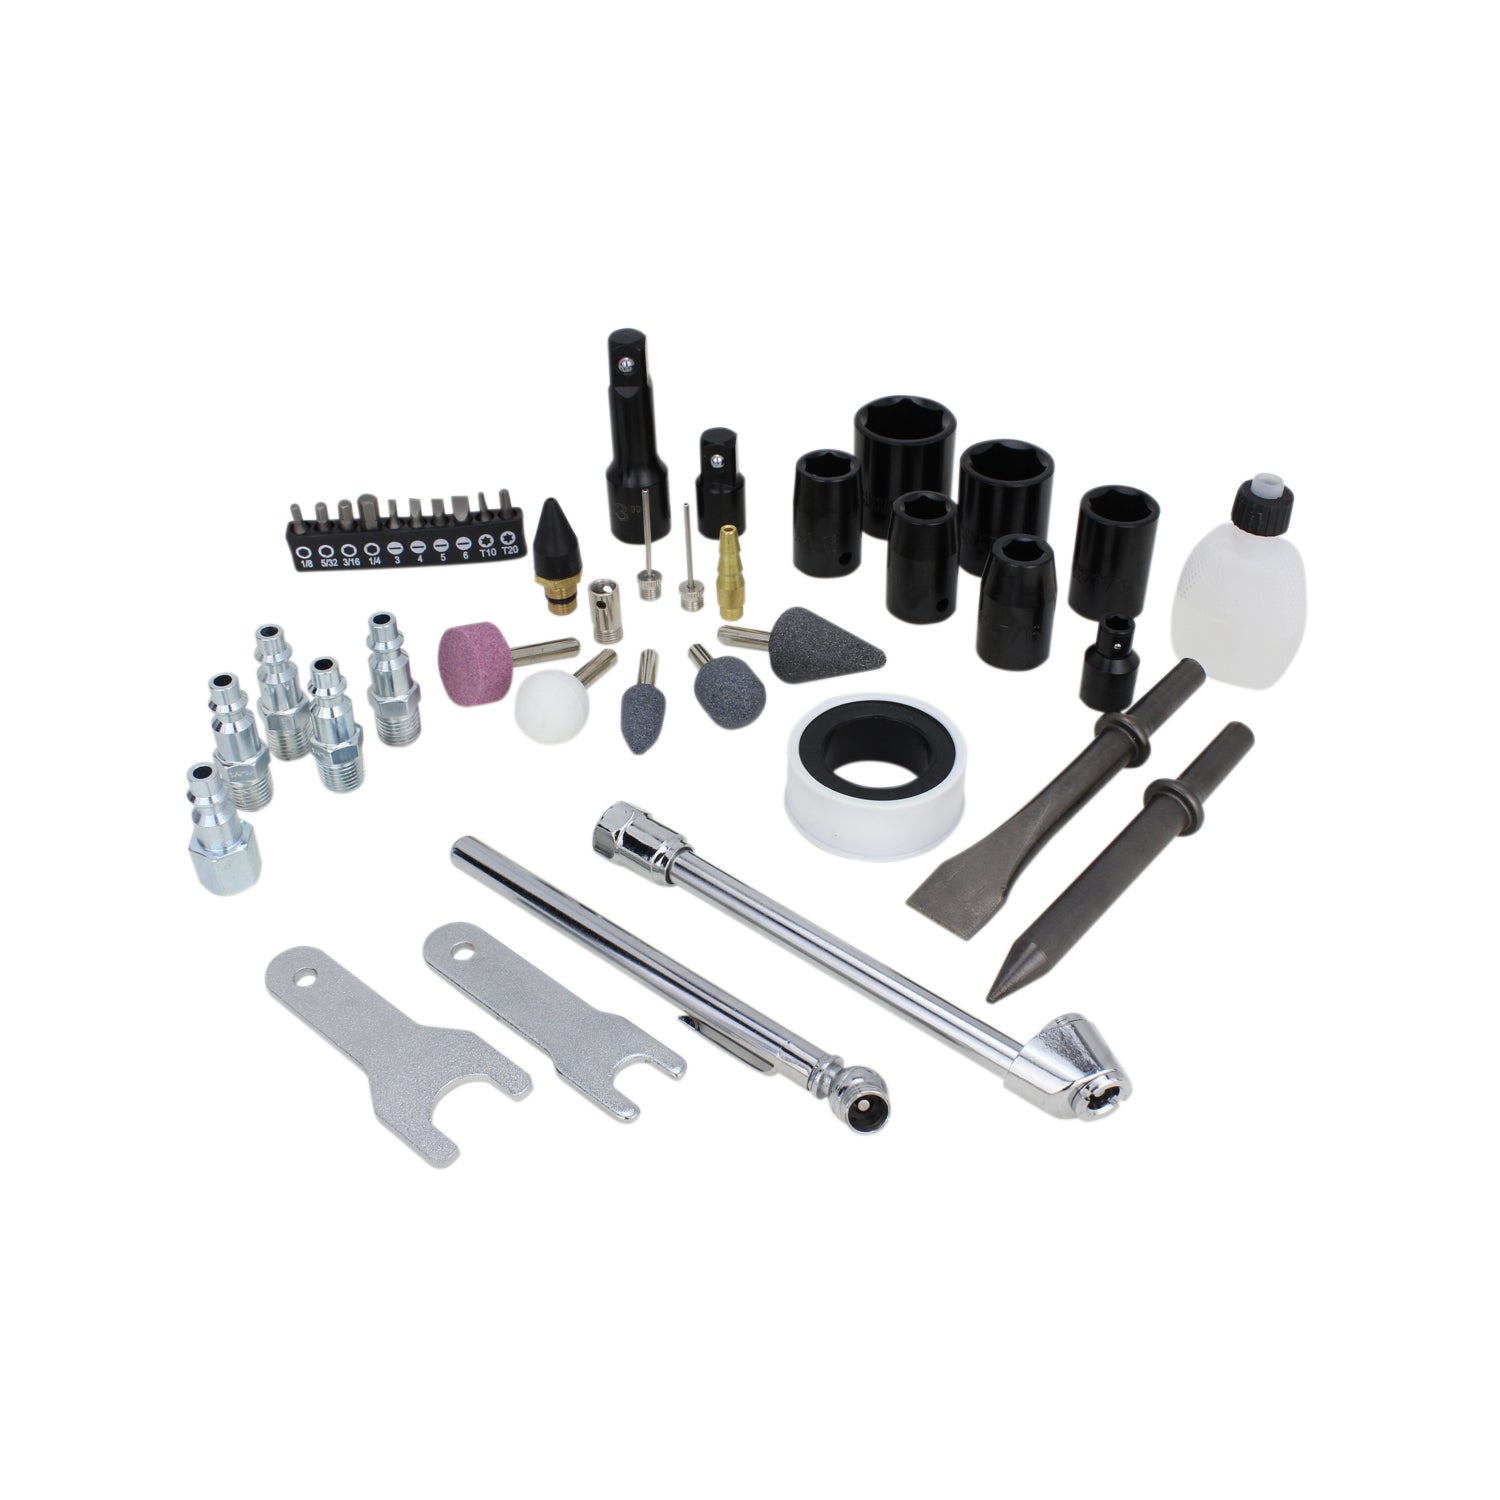 EXELAIR® 50-Pc. COMPOSITE Professional High Torque Automotive Air Tools & Accessory Kit